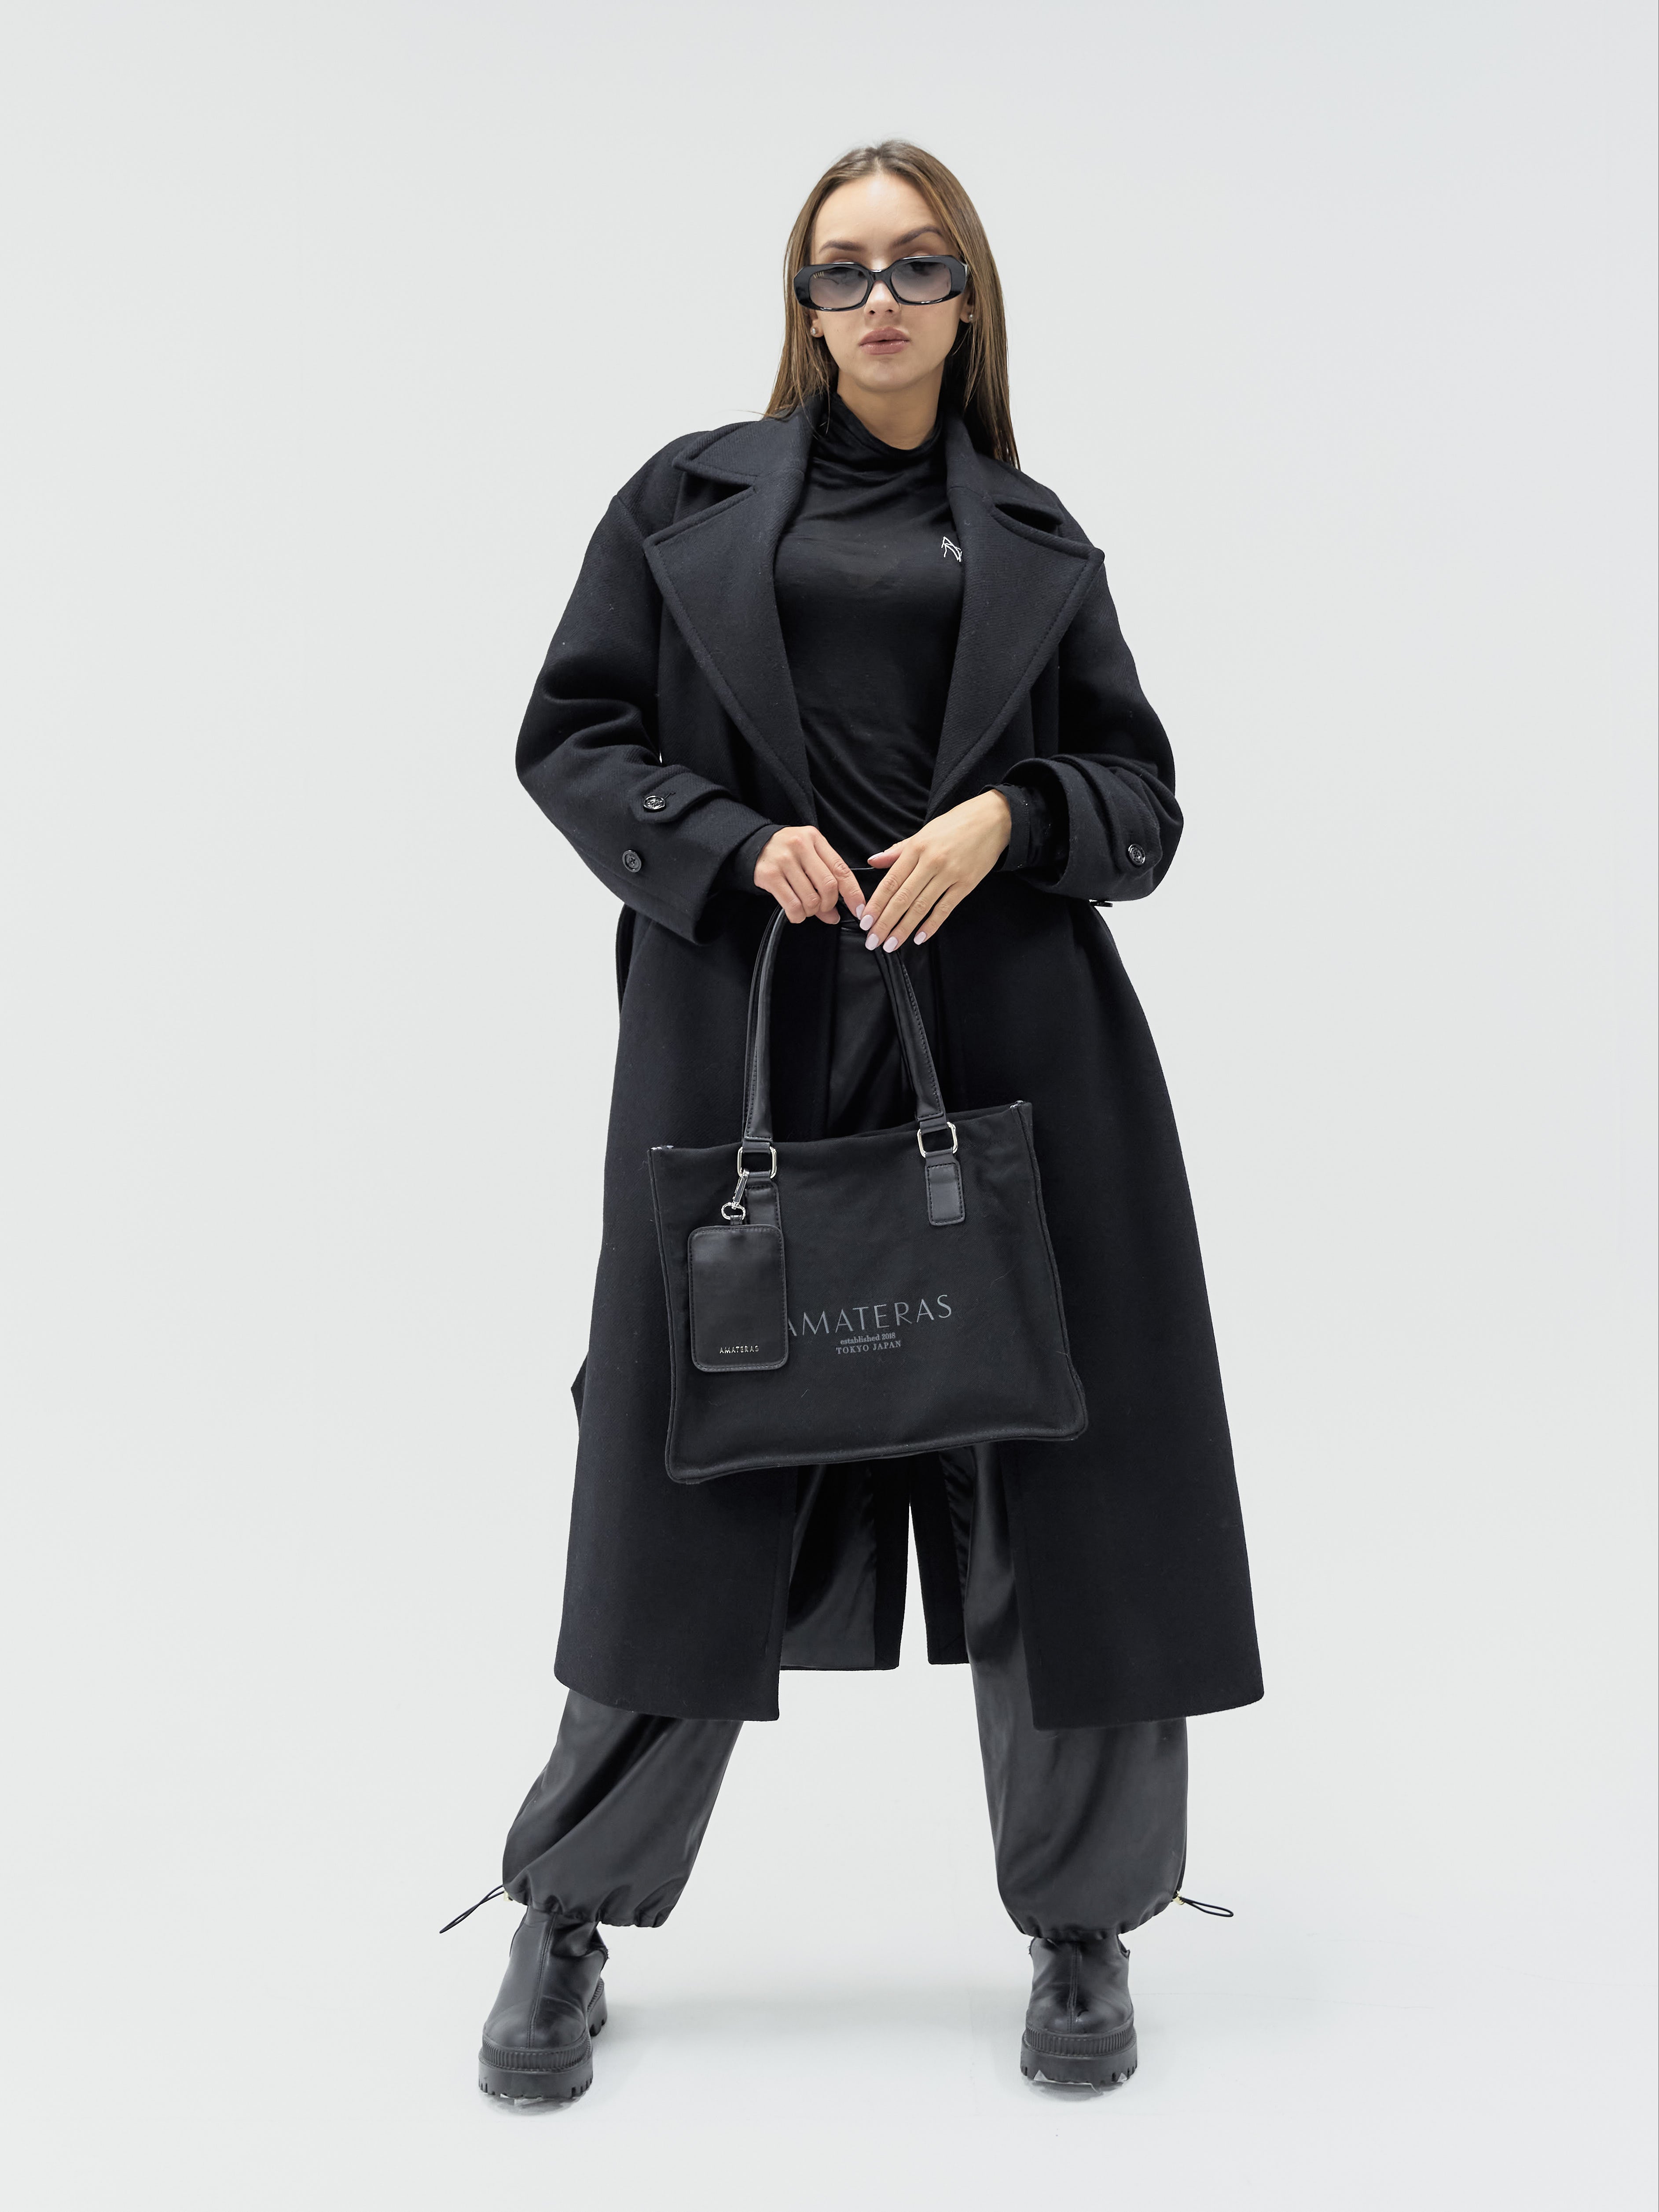 asanoha canvas bag mini / 墨(black) – AMATERASJAPAN